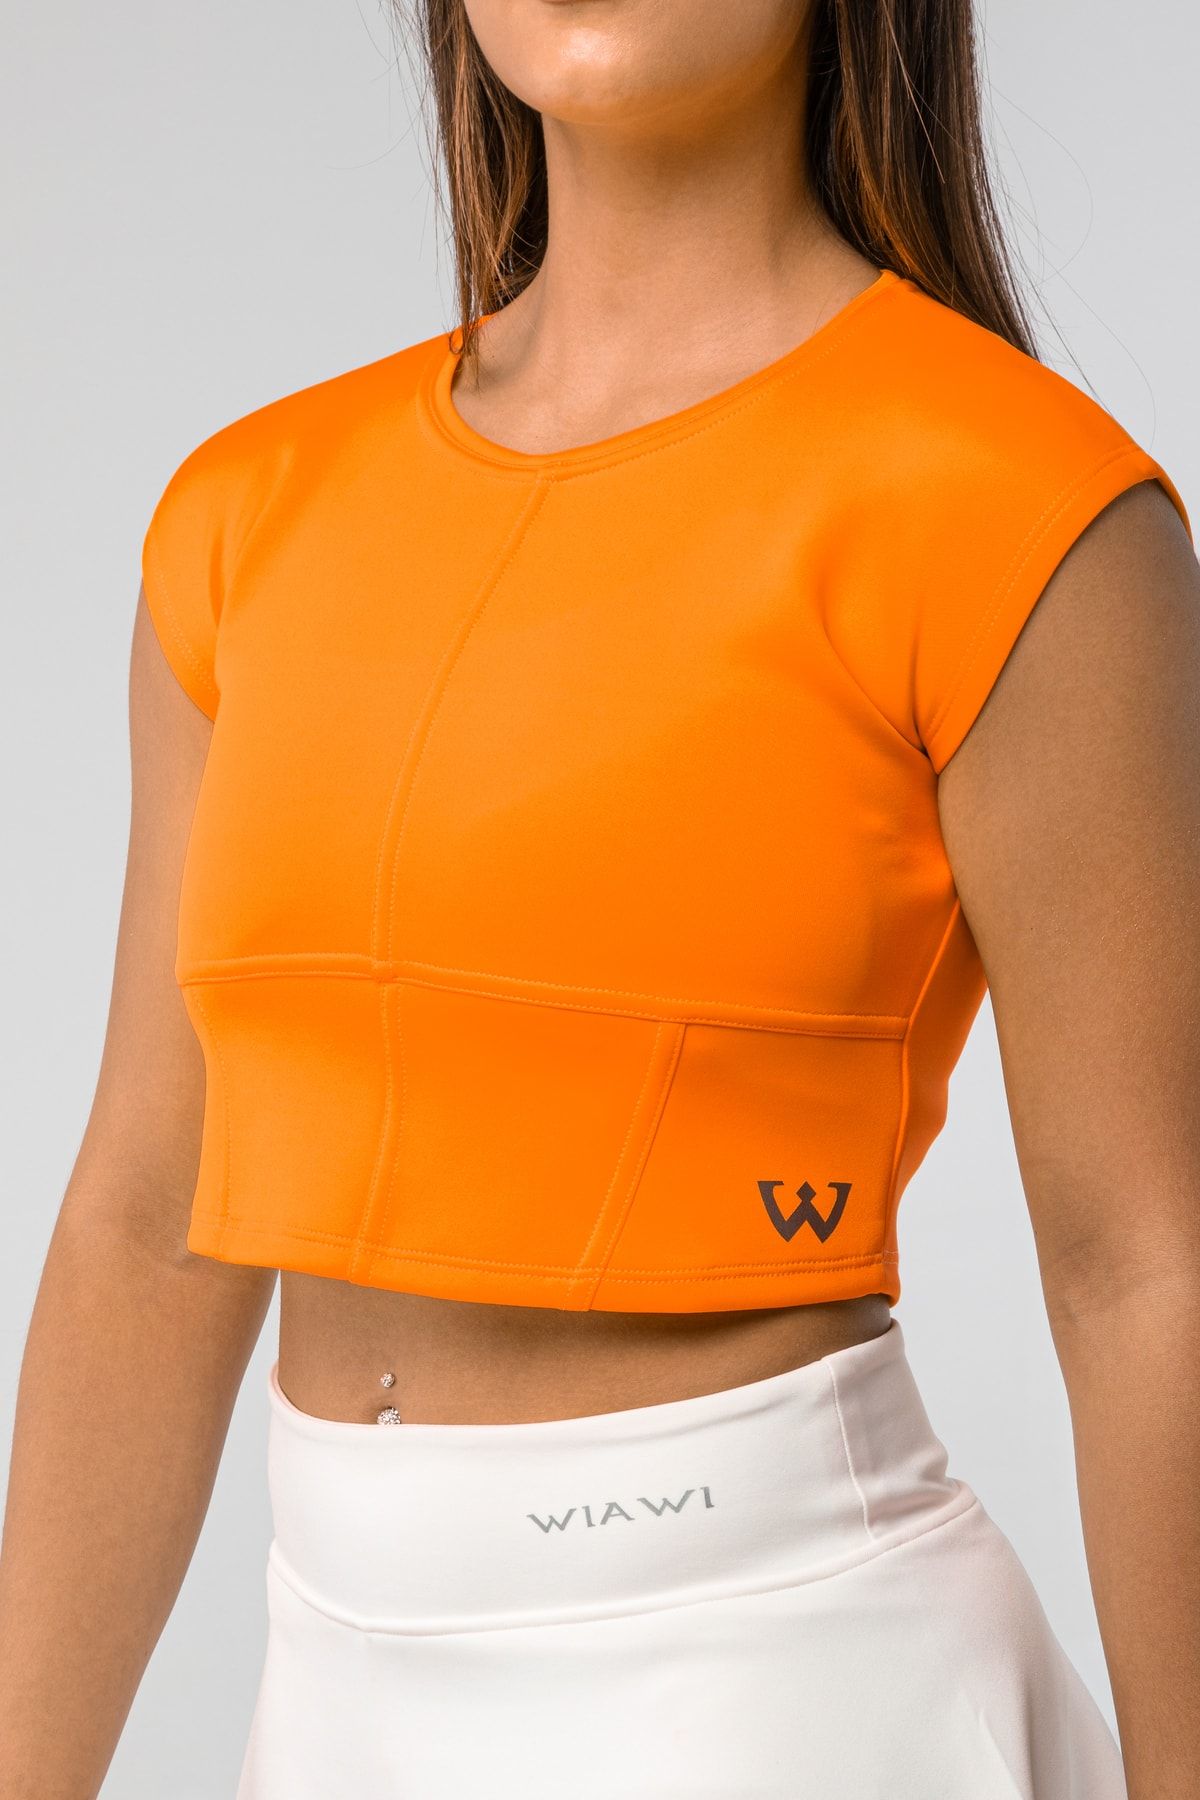 Wiawi Kadın Spor Fit Rahat Tişört Esnek Crop Top - Brave Turuncu